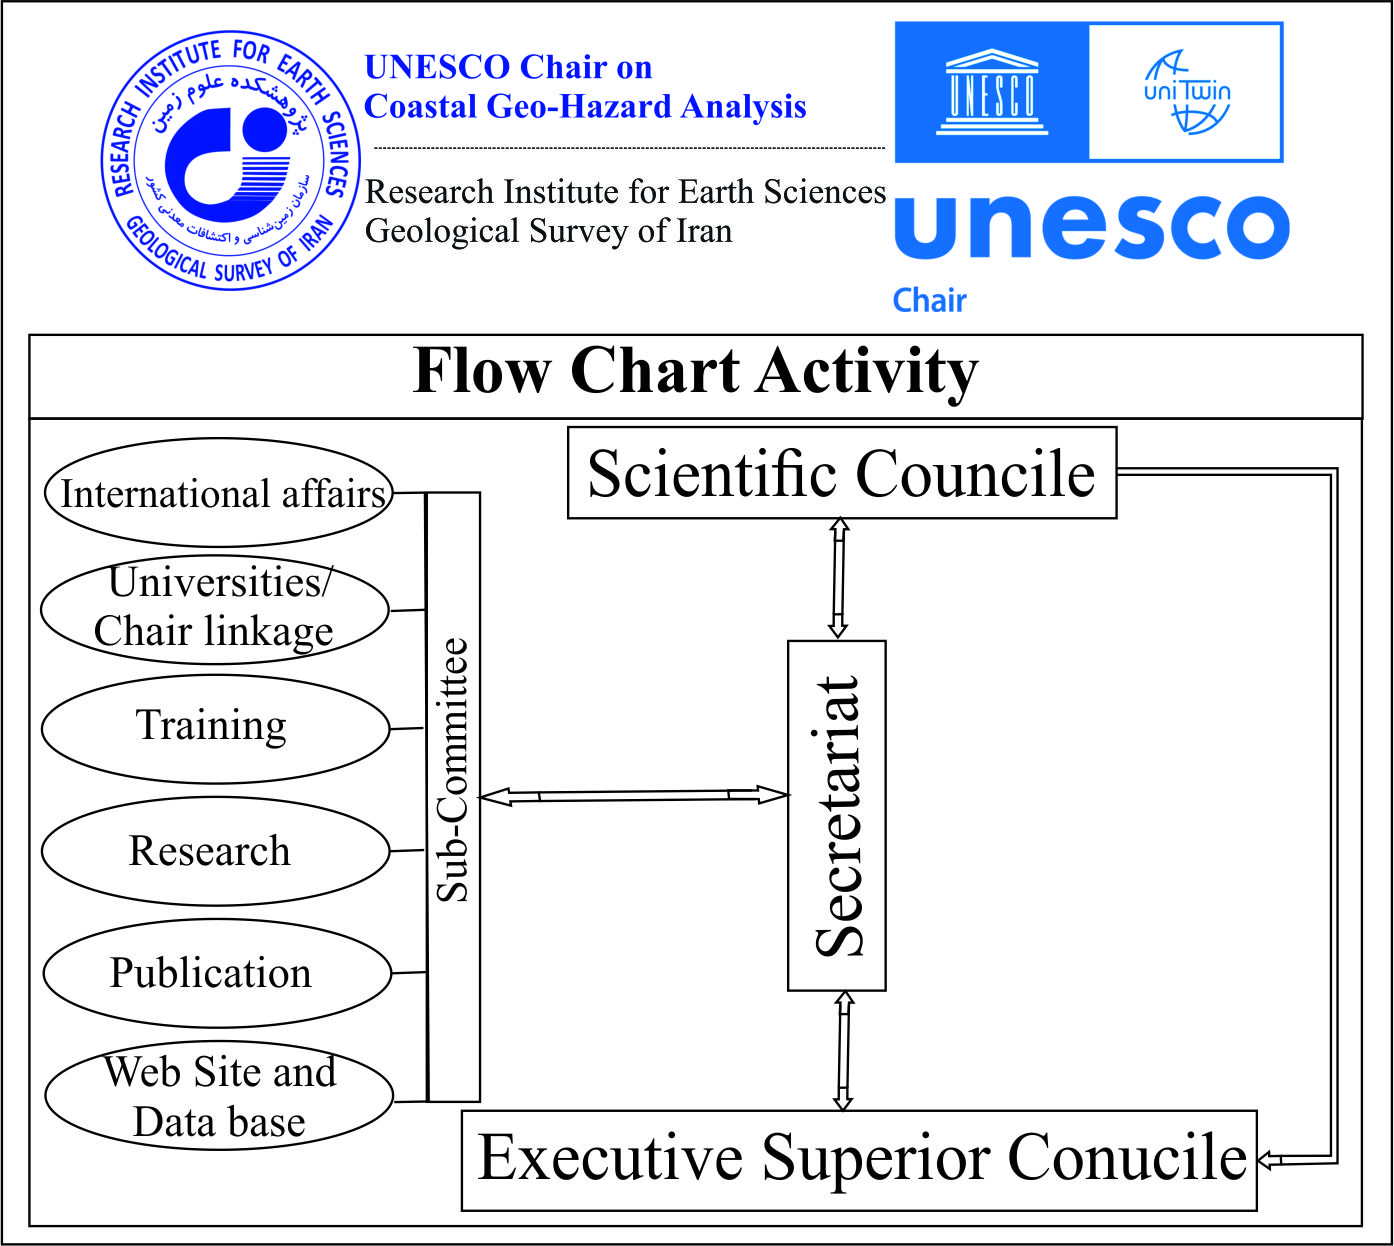 Flow chart activity